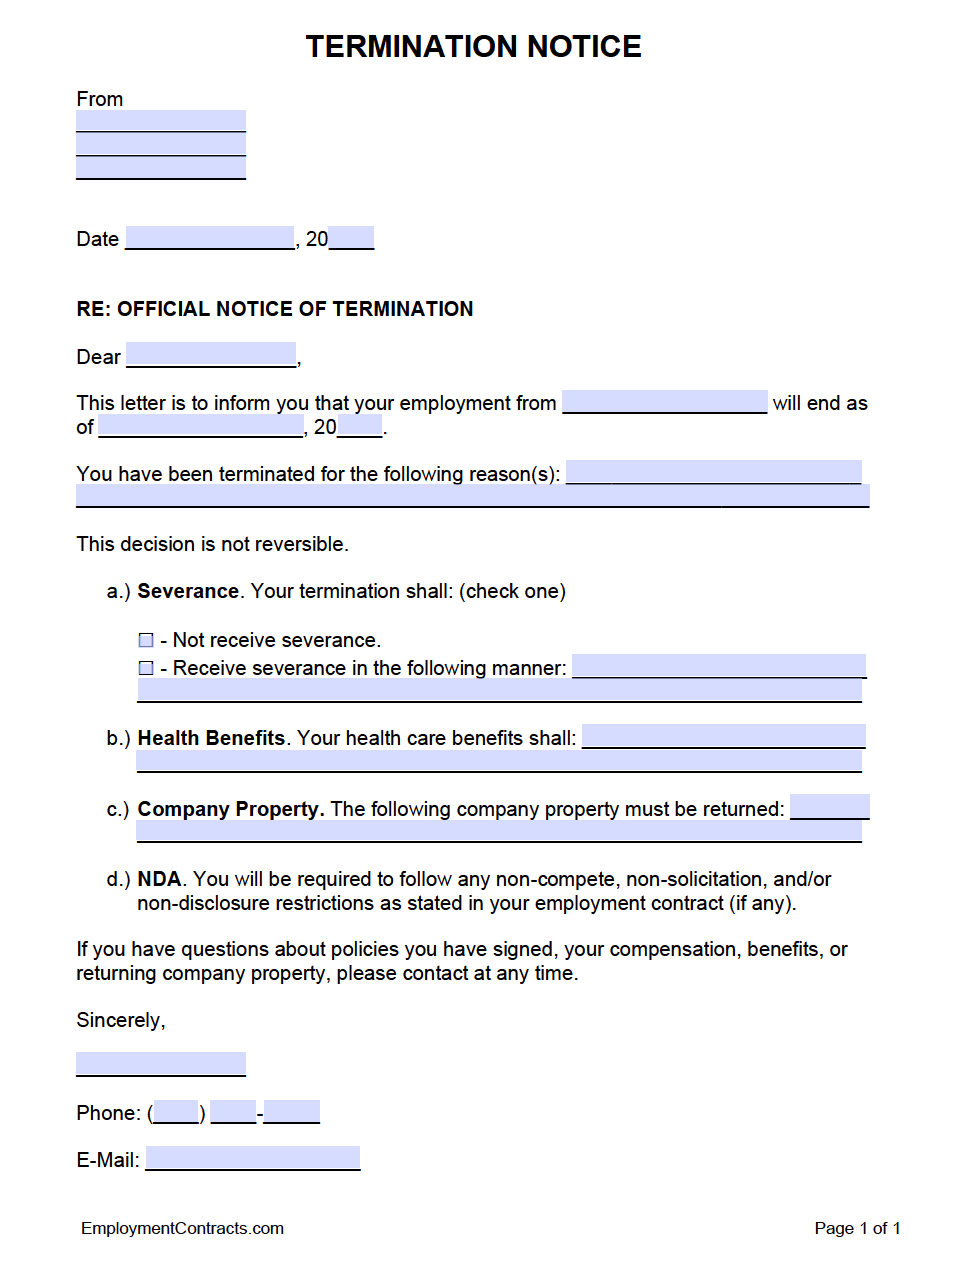 Printable Employee Termination Form Pdf - Printable Forms Free Online